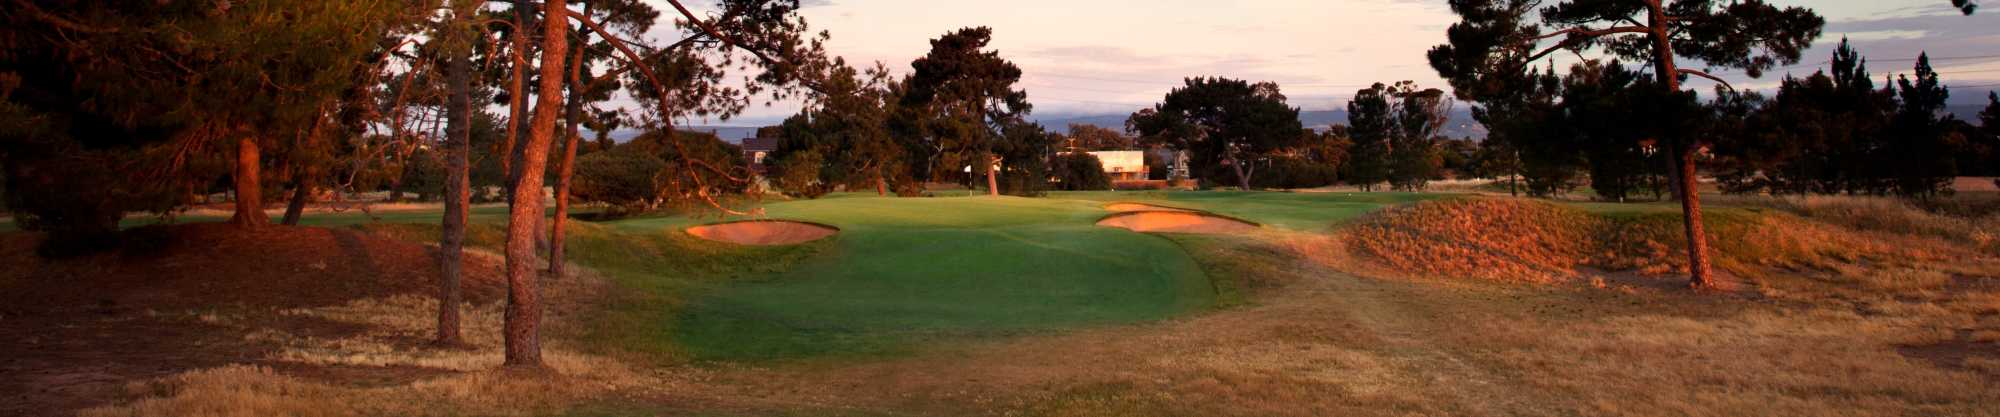 Royal Adelaide Golf Club 14th hole